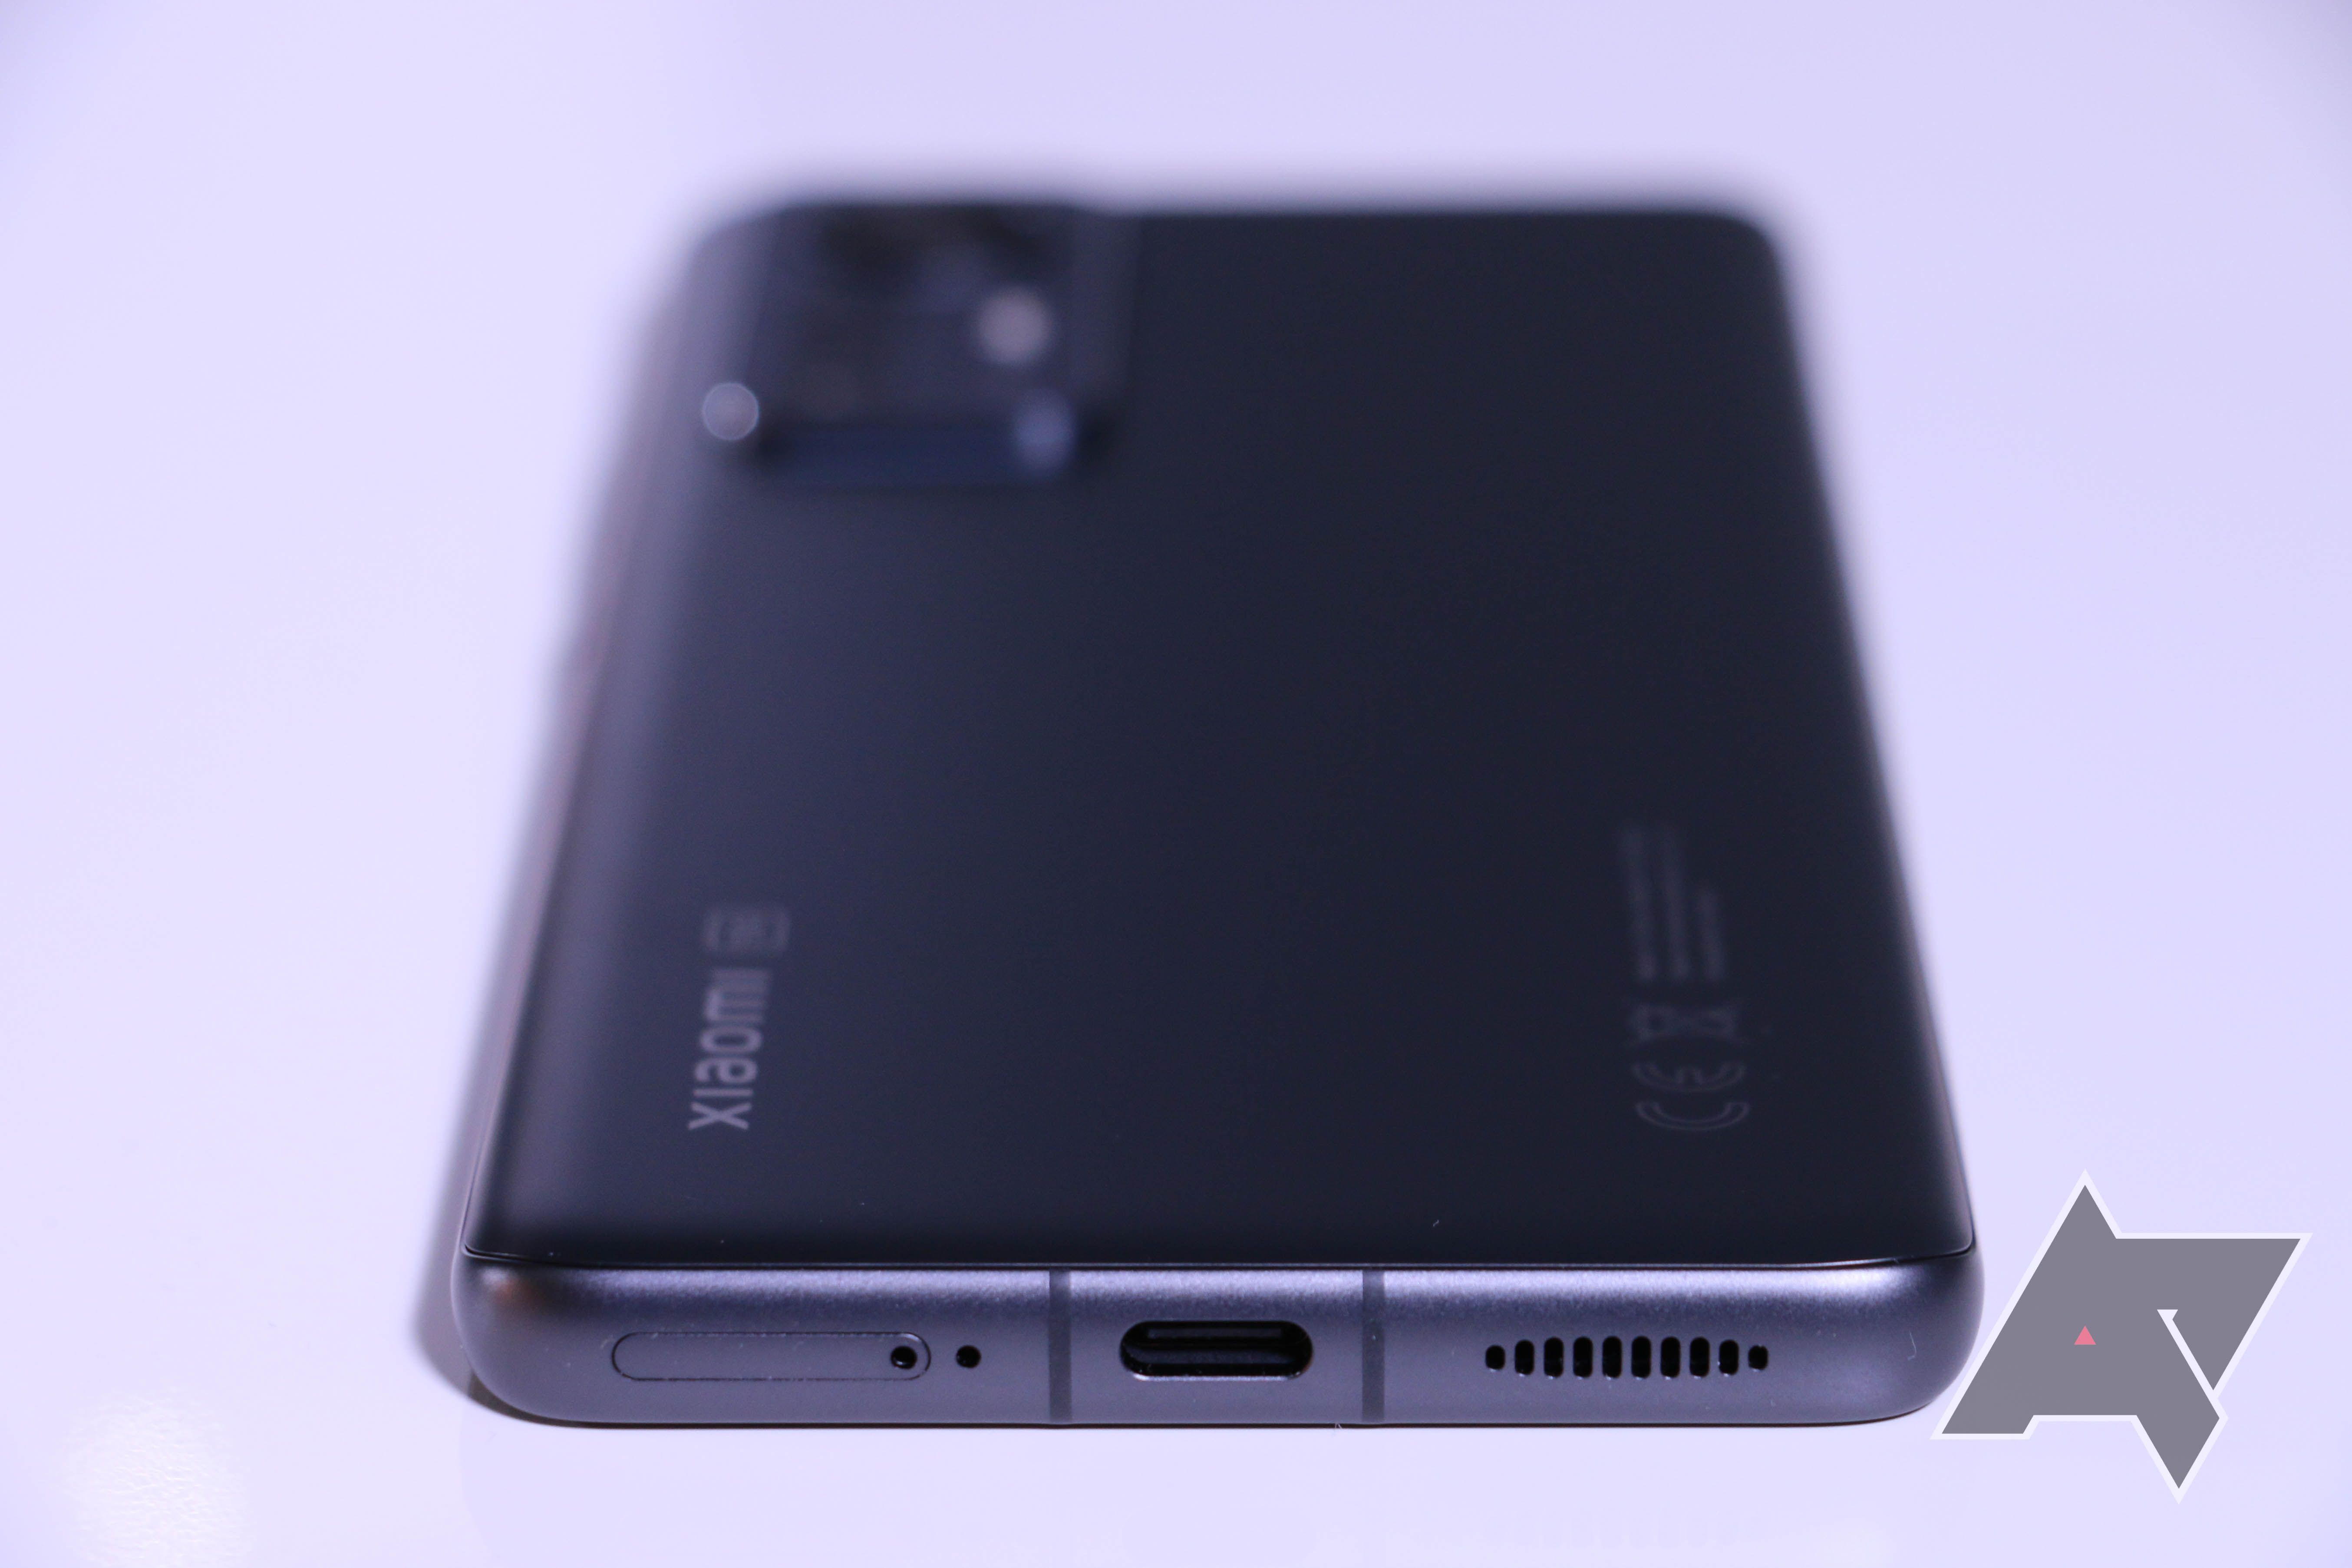 Xiaomi 12X review: Petite, problematic powerhouse